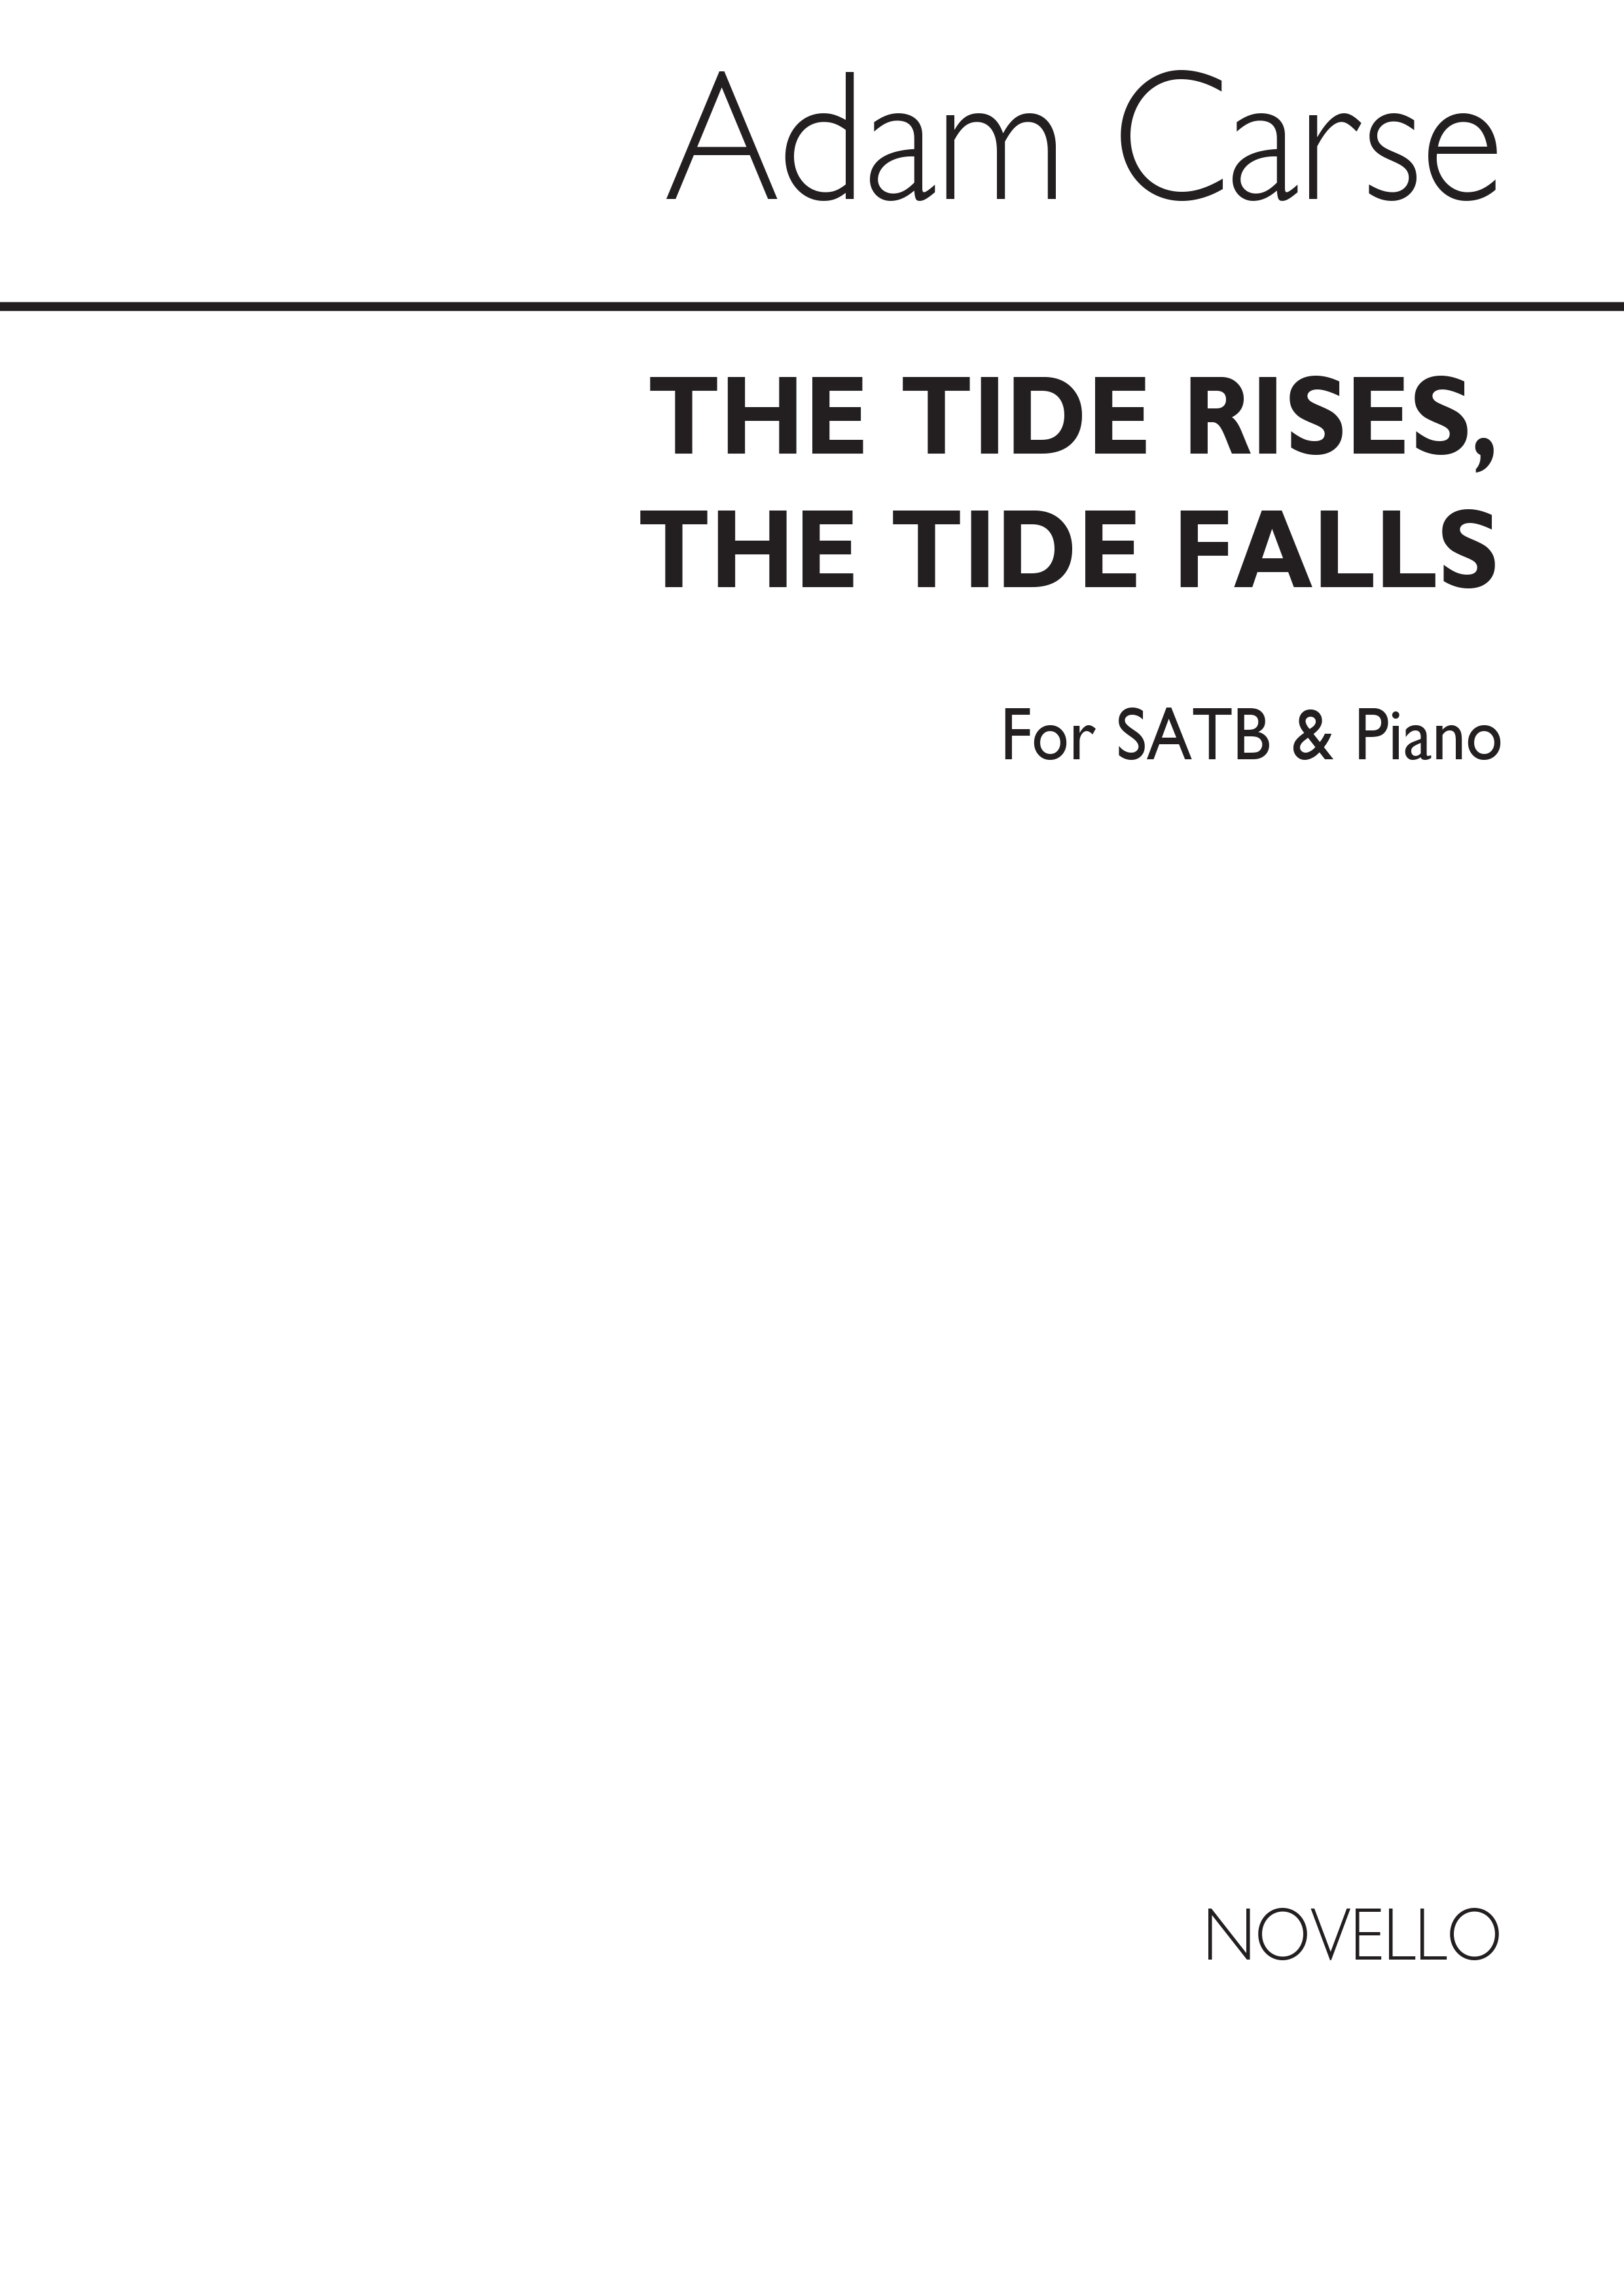 Adam Carse: The Tide Rises, The Tide Falls